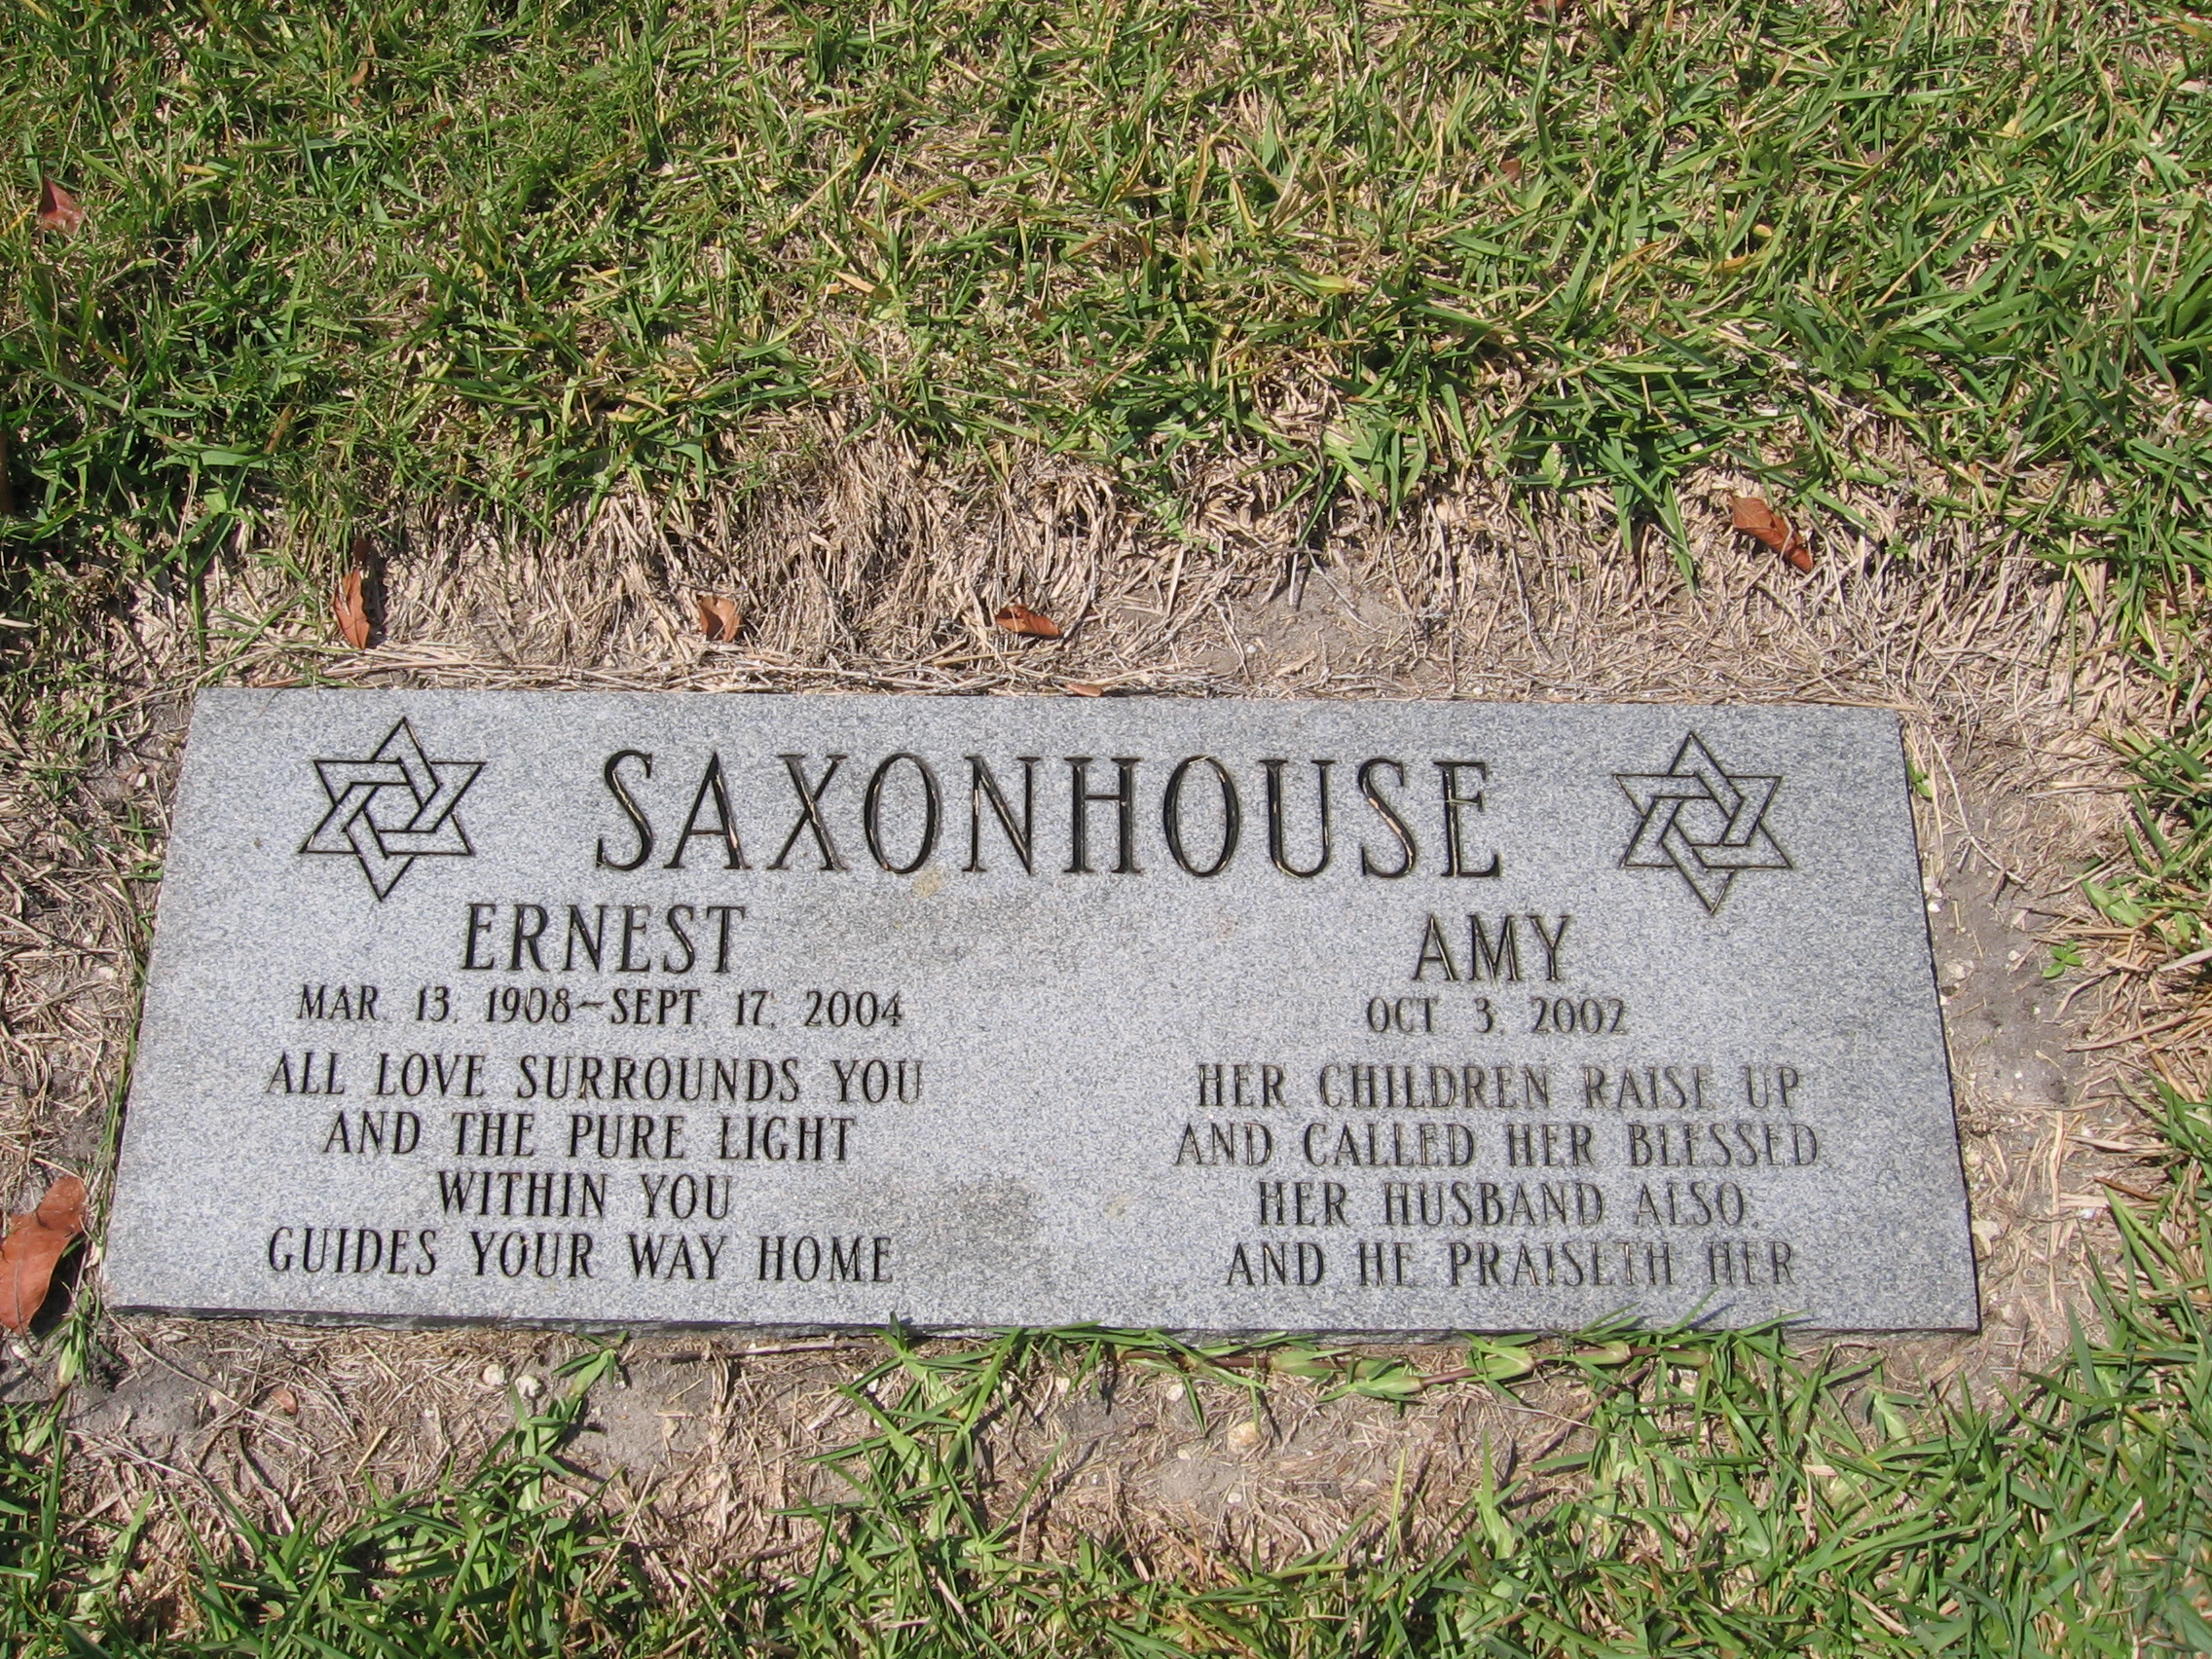 Ernest Saxonhouse